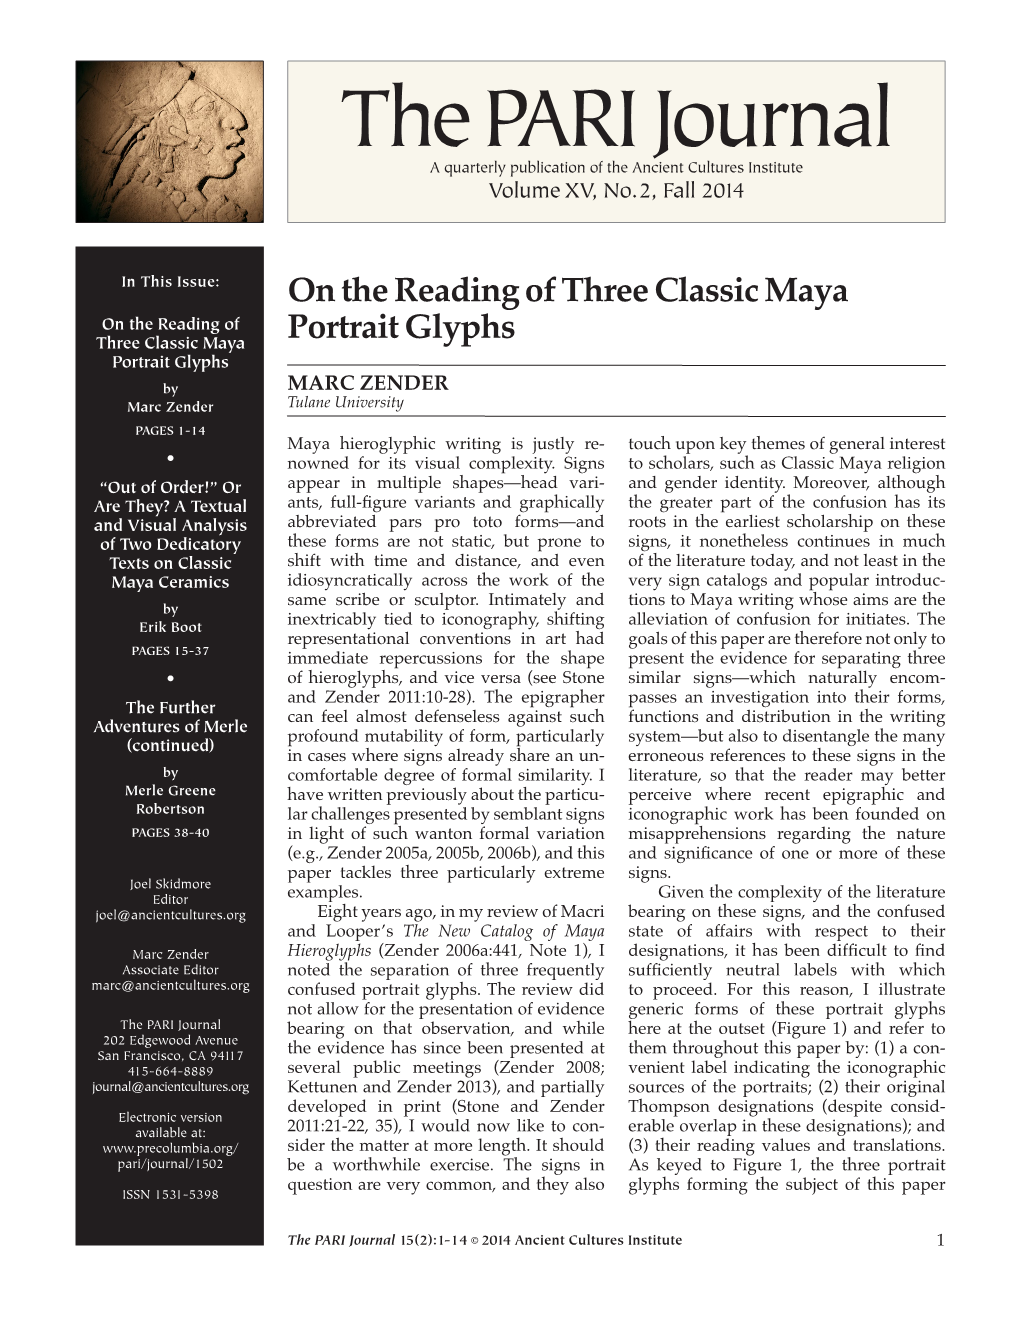 On the Reading of Three Classic Maya Portrait